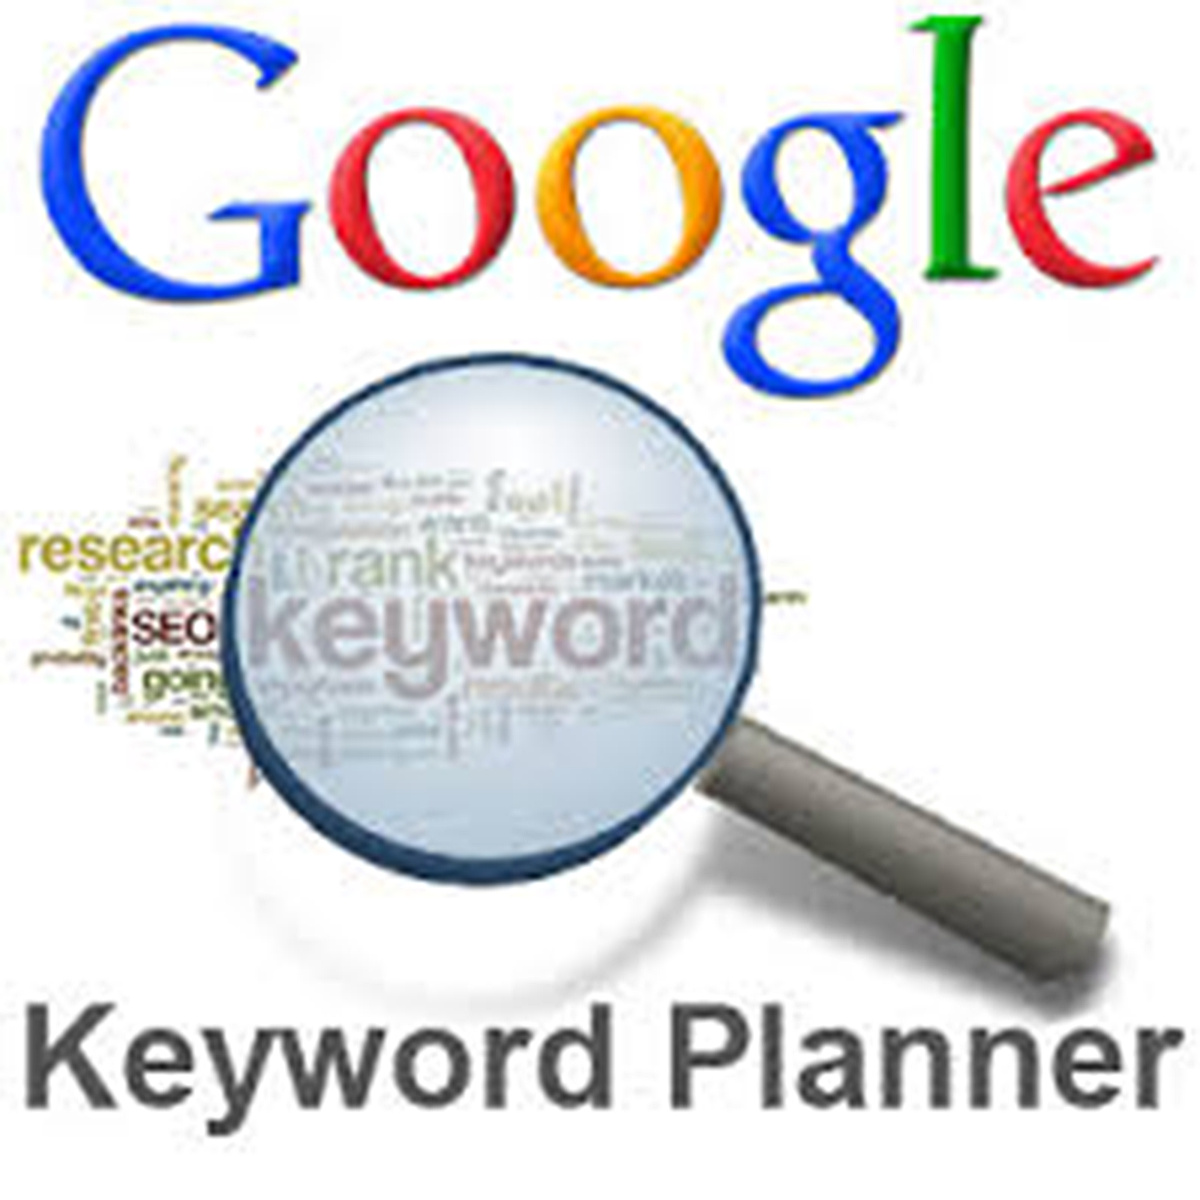 Google-Keyword-Planner-Large